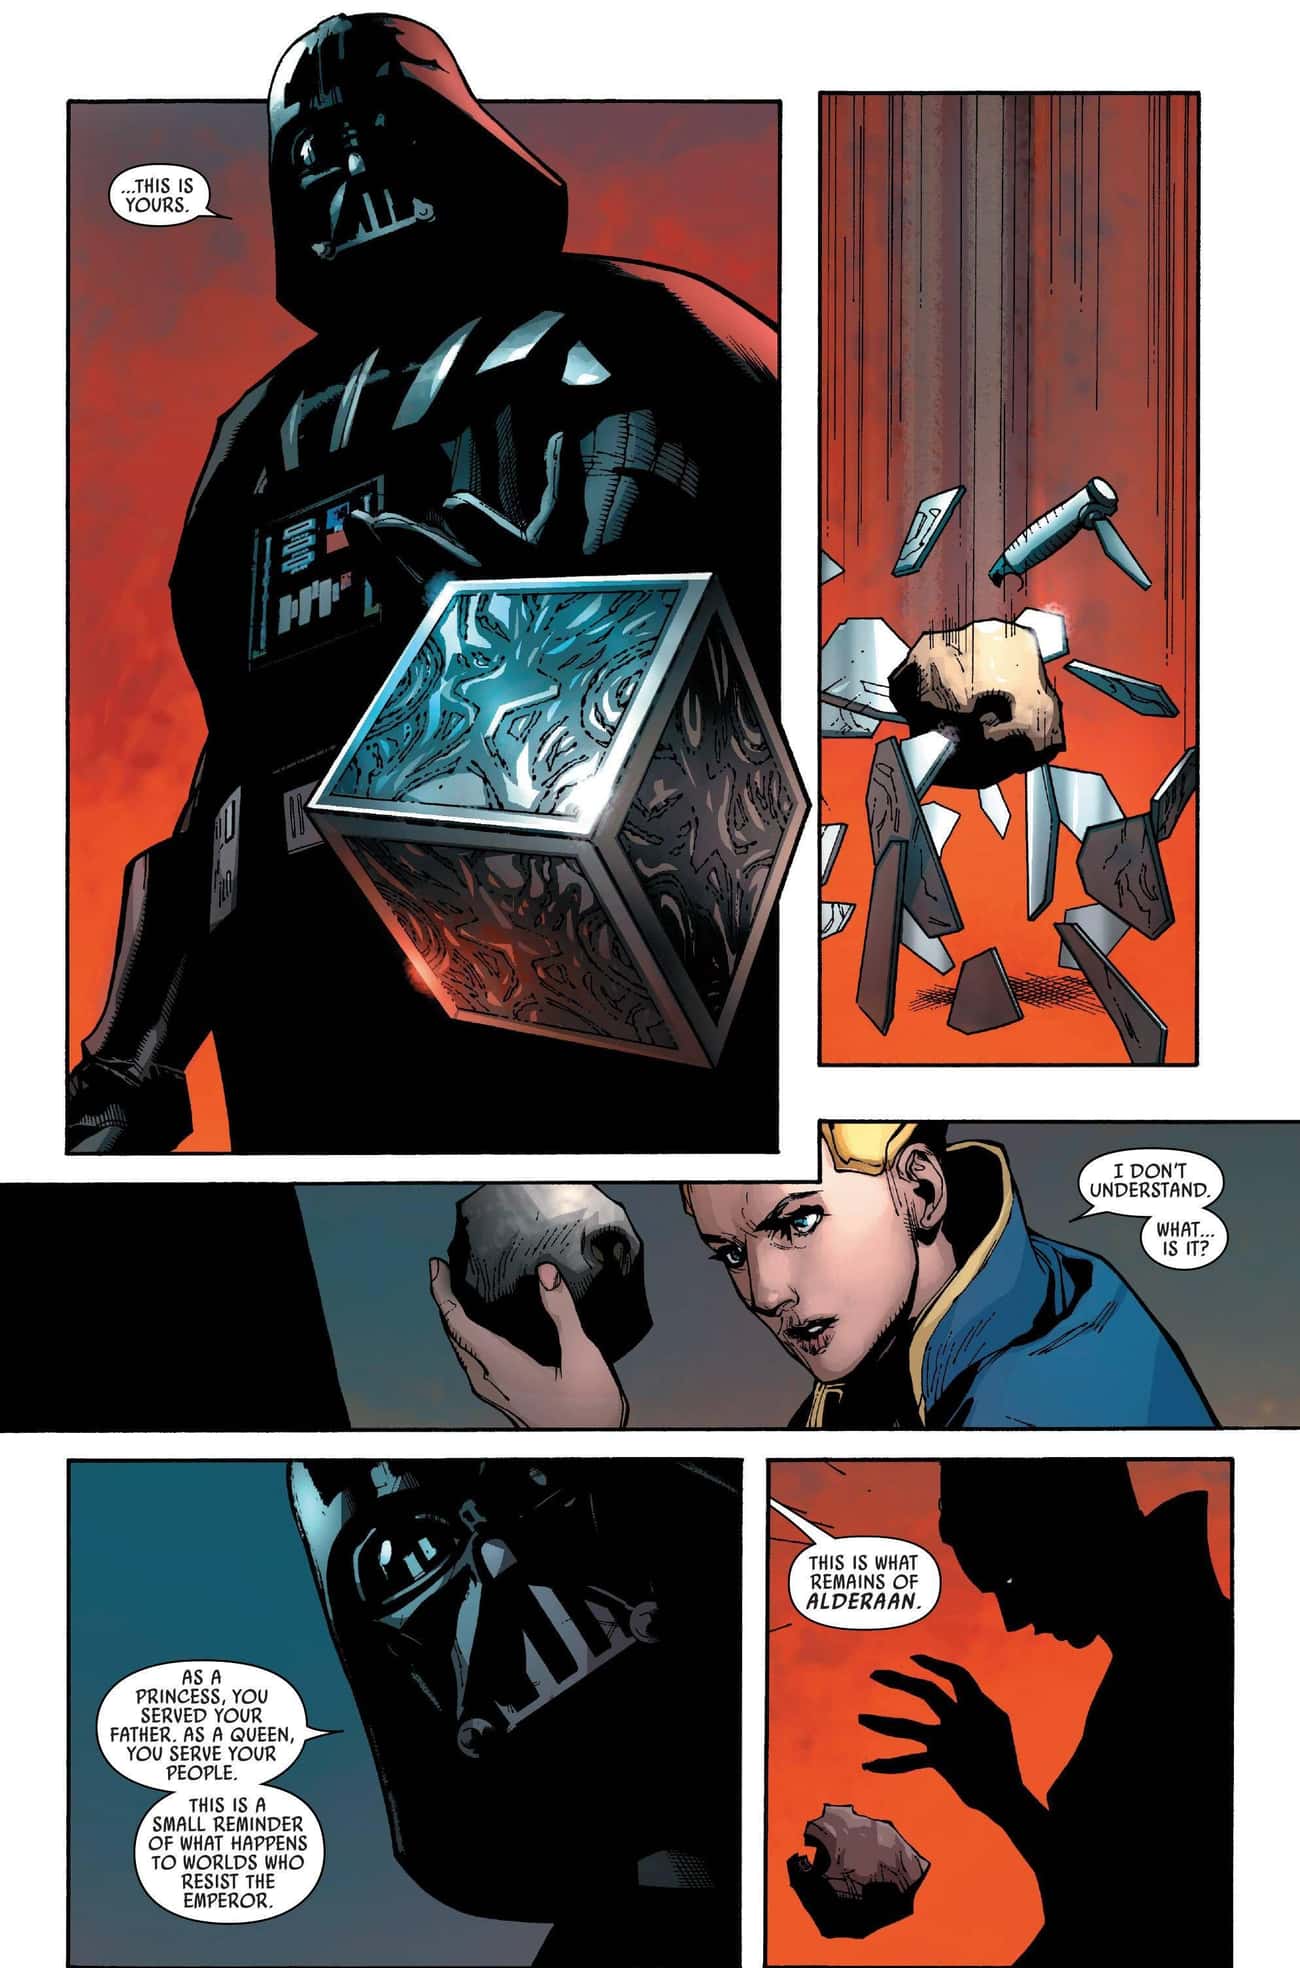 Darth Vader Uses Chunks Of Alderaan To Threaten People